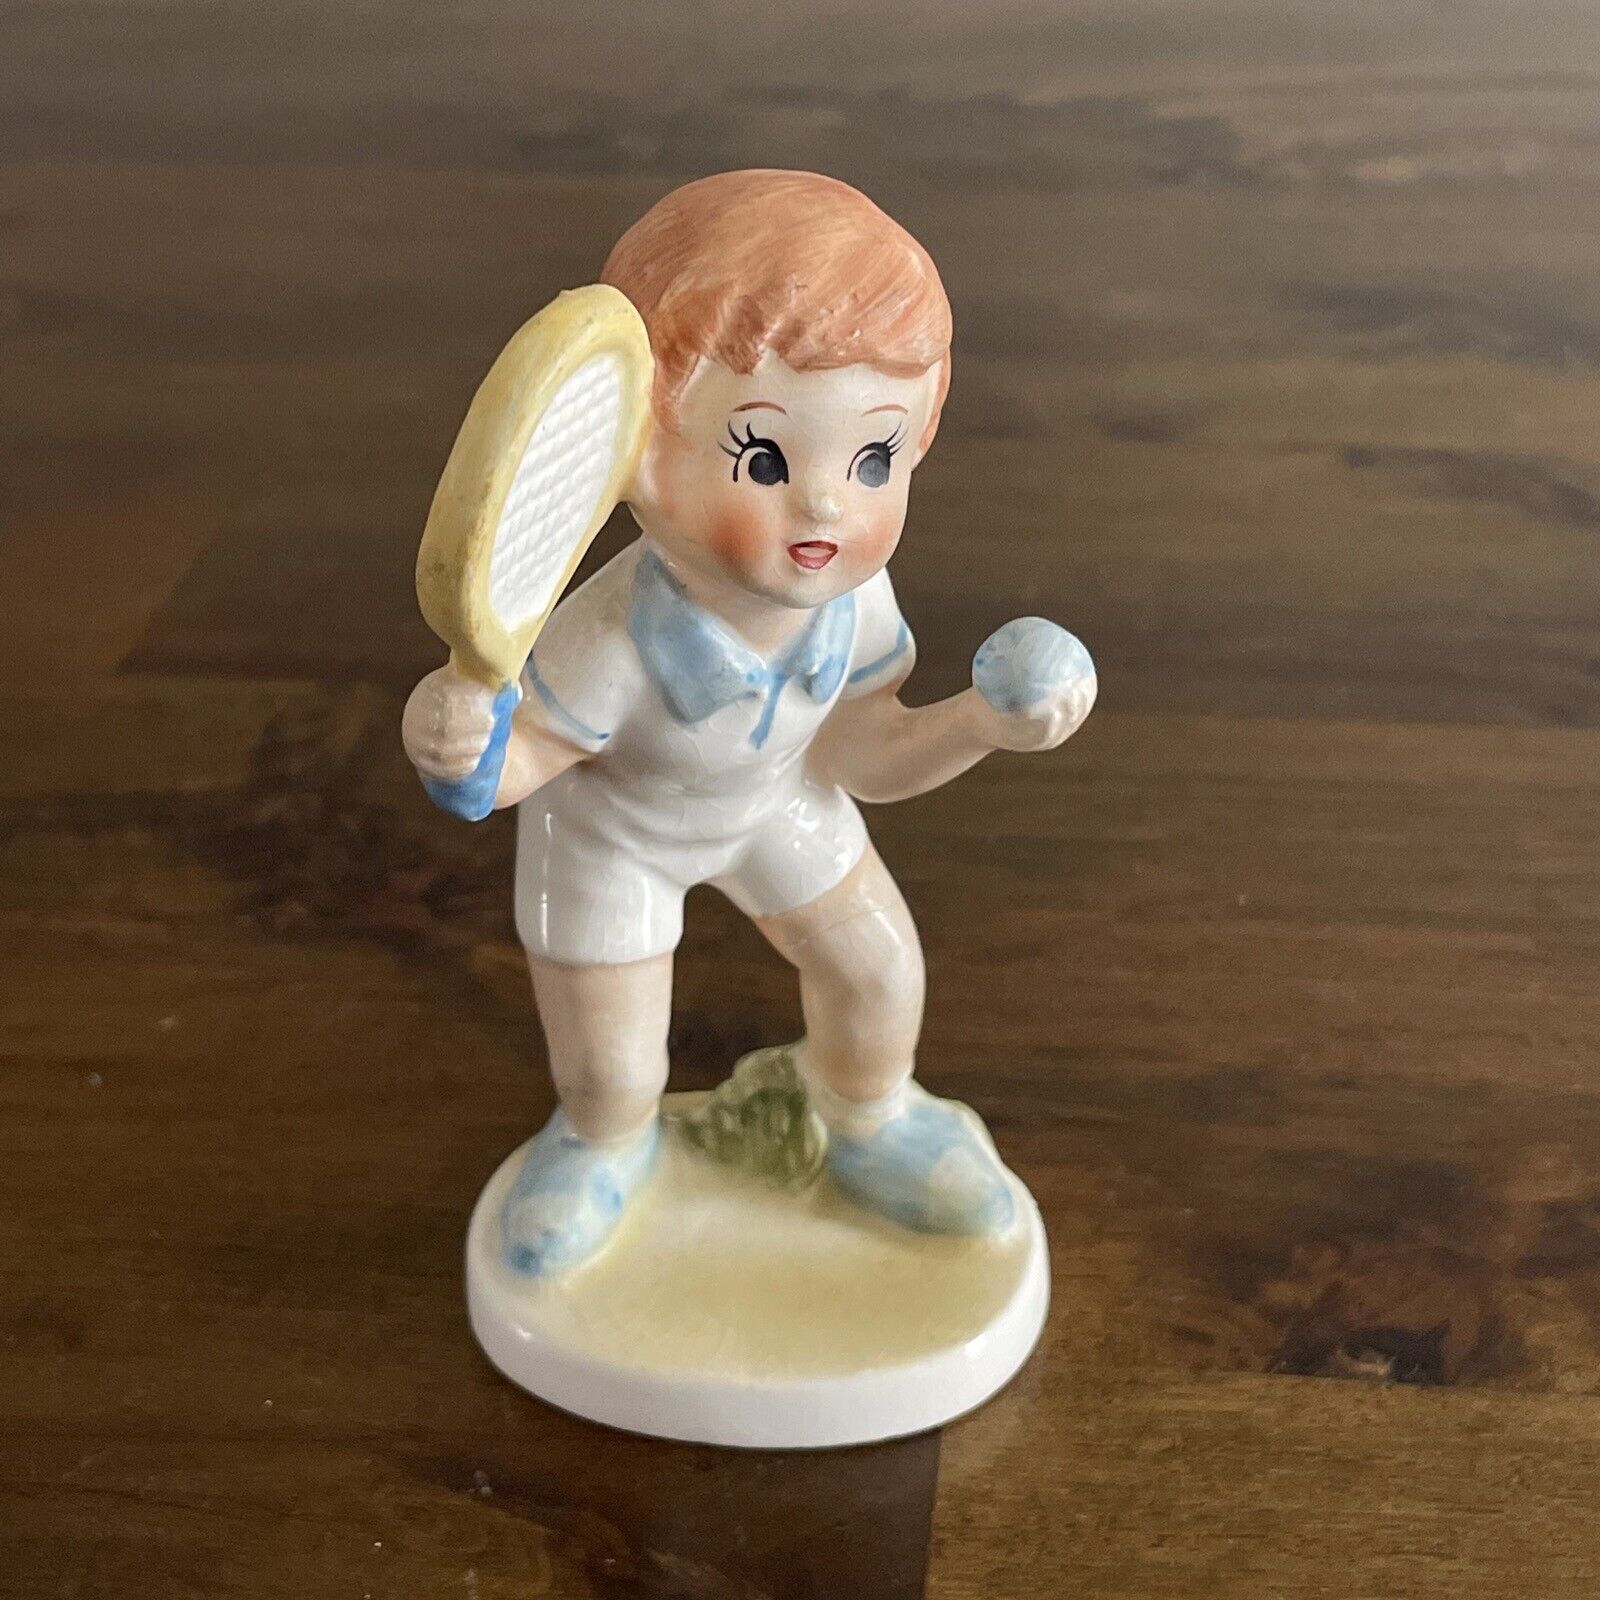 Vintage Porcelain Figurine Playing Tennis Pickle Ball Japan